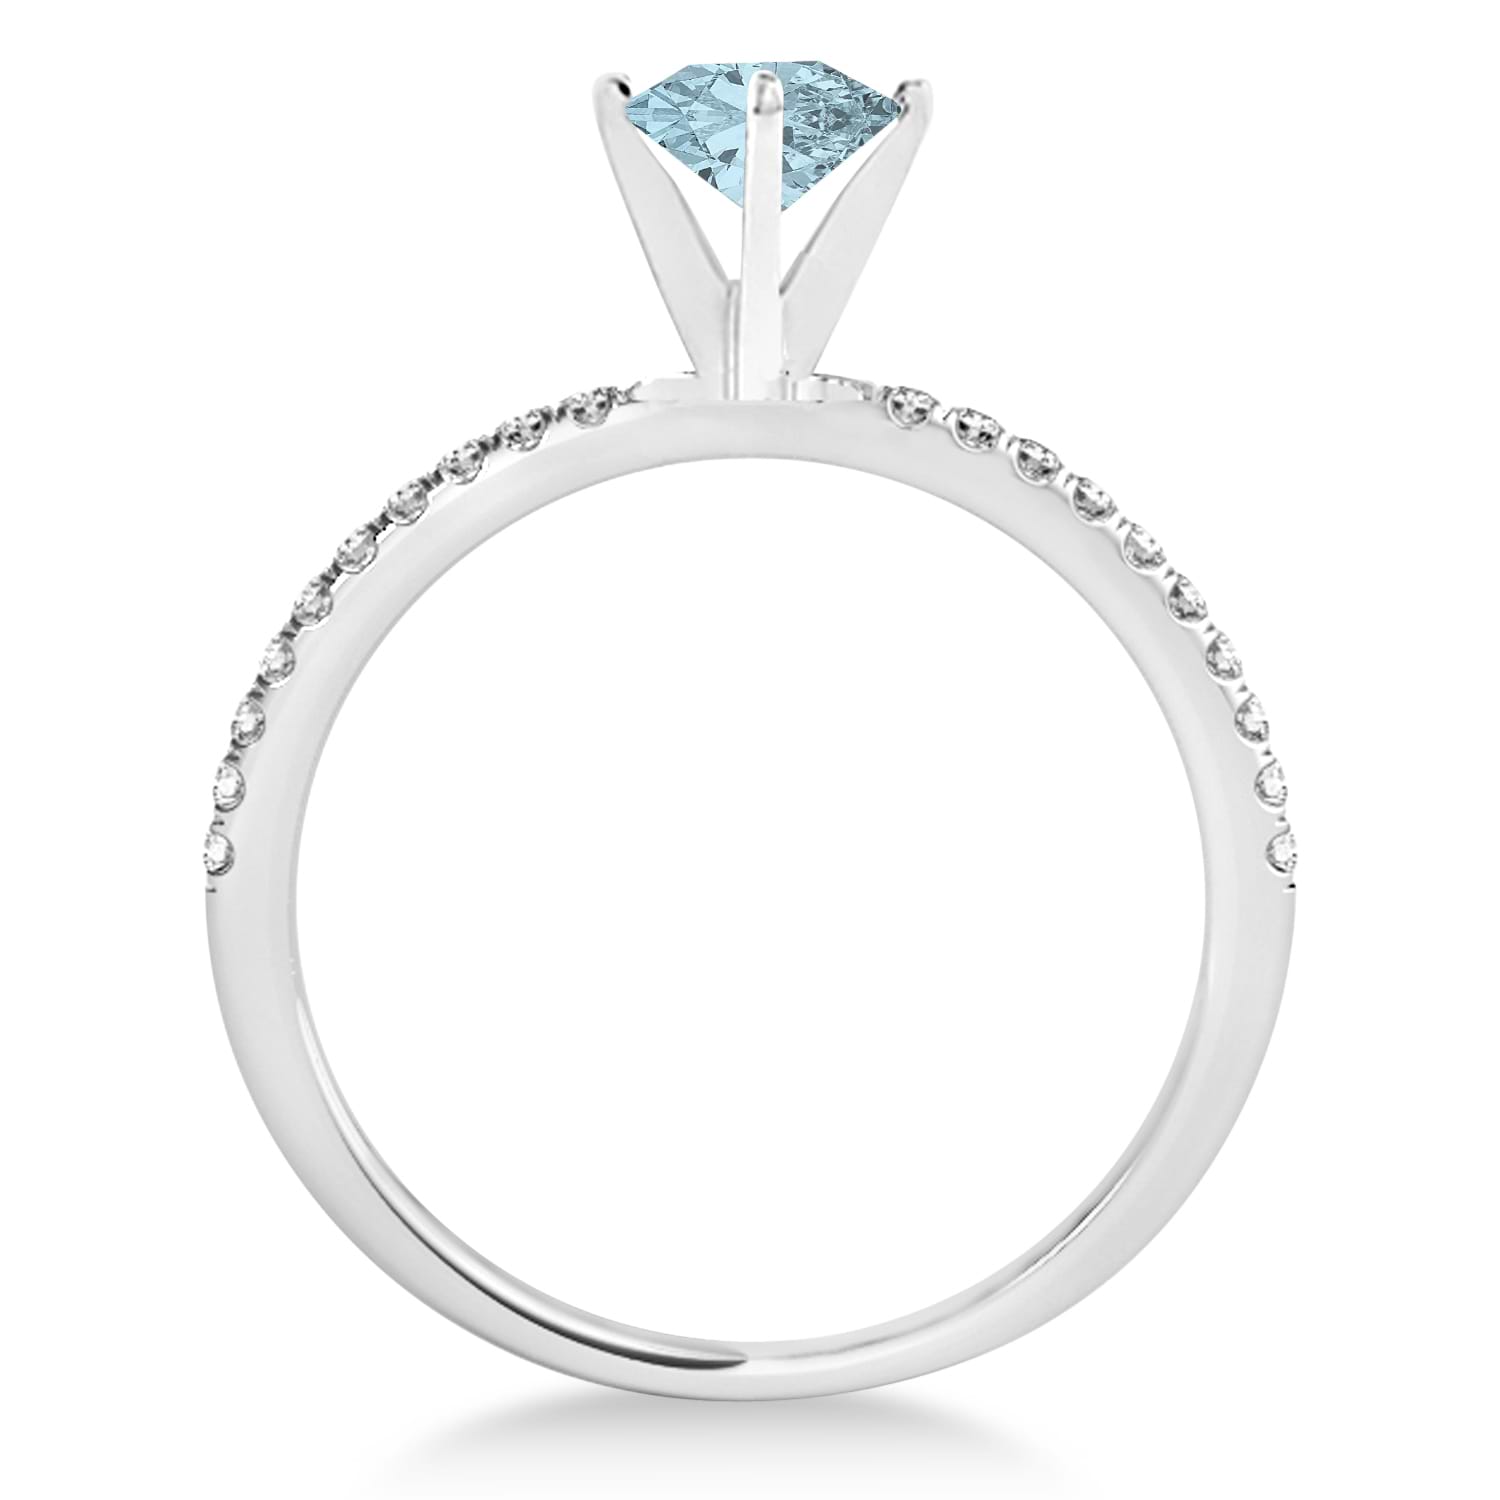 Aquamarine & Diamond Accented Oval Shape Engagement Ring 18k White Gold (1.00ct)